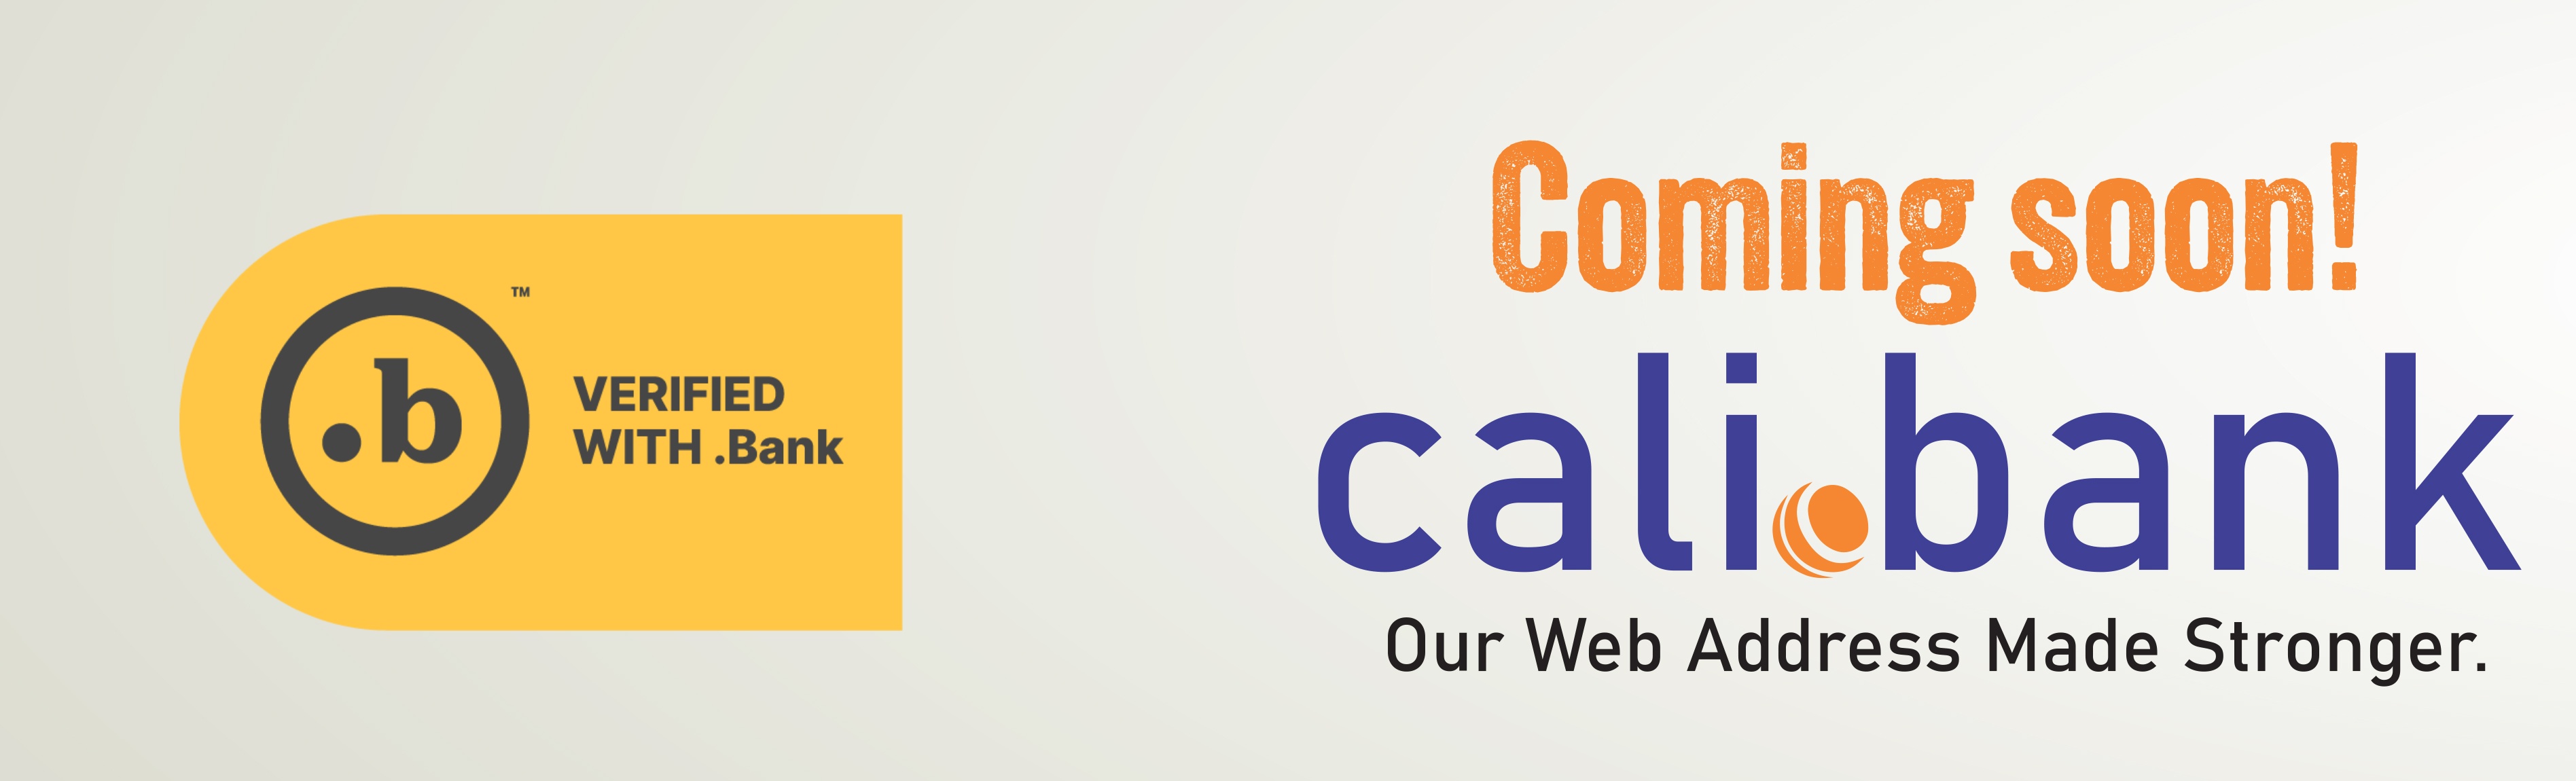 cali.bank coming soon logo with .bank verified logo